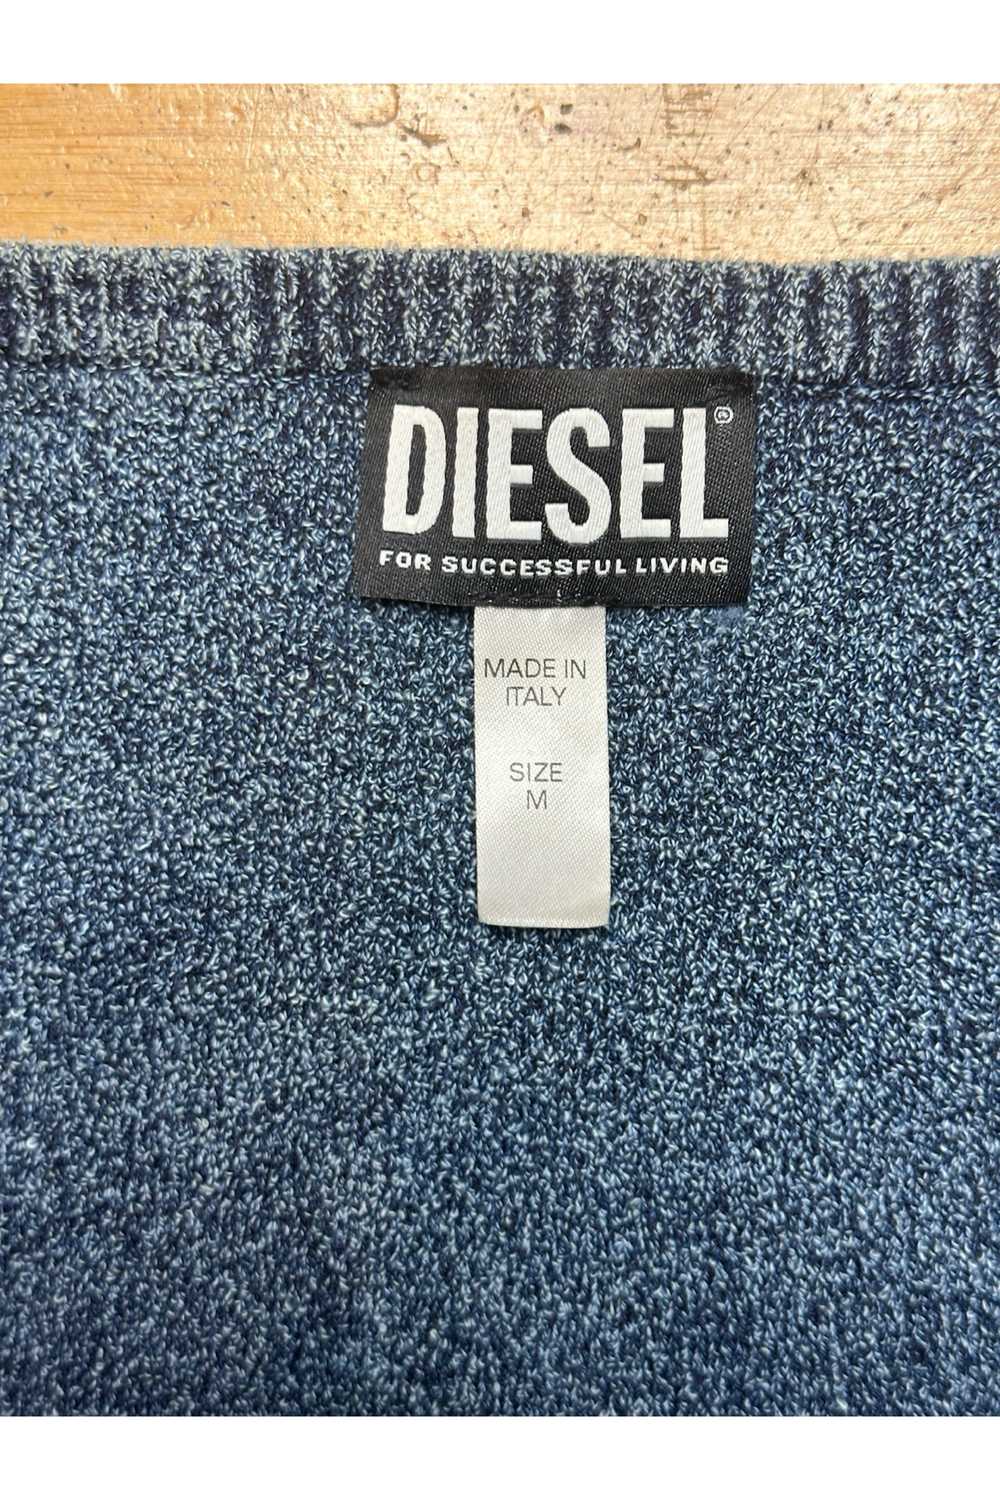 Diesel Cropped Cardigan (Size M) - image 3